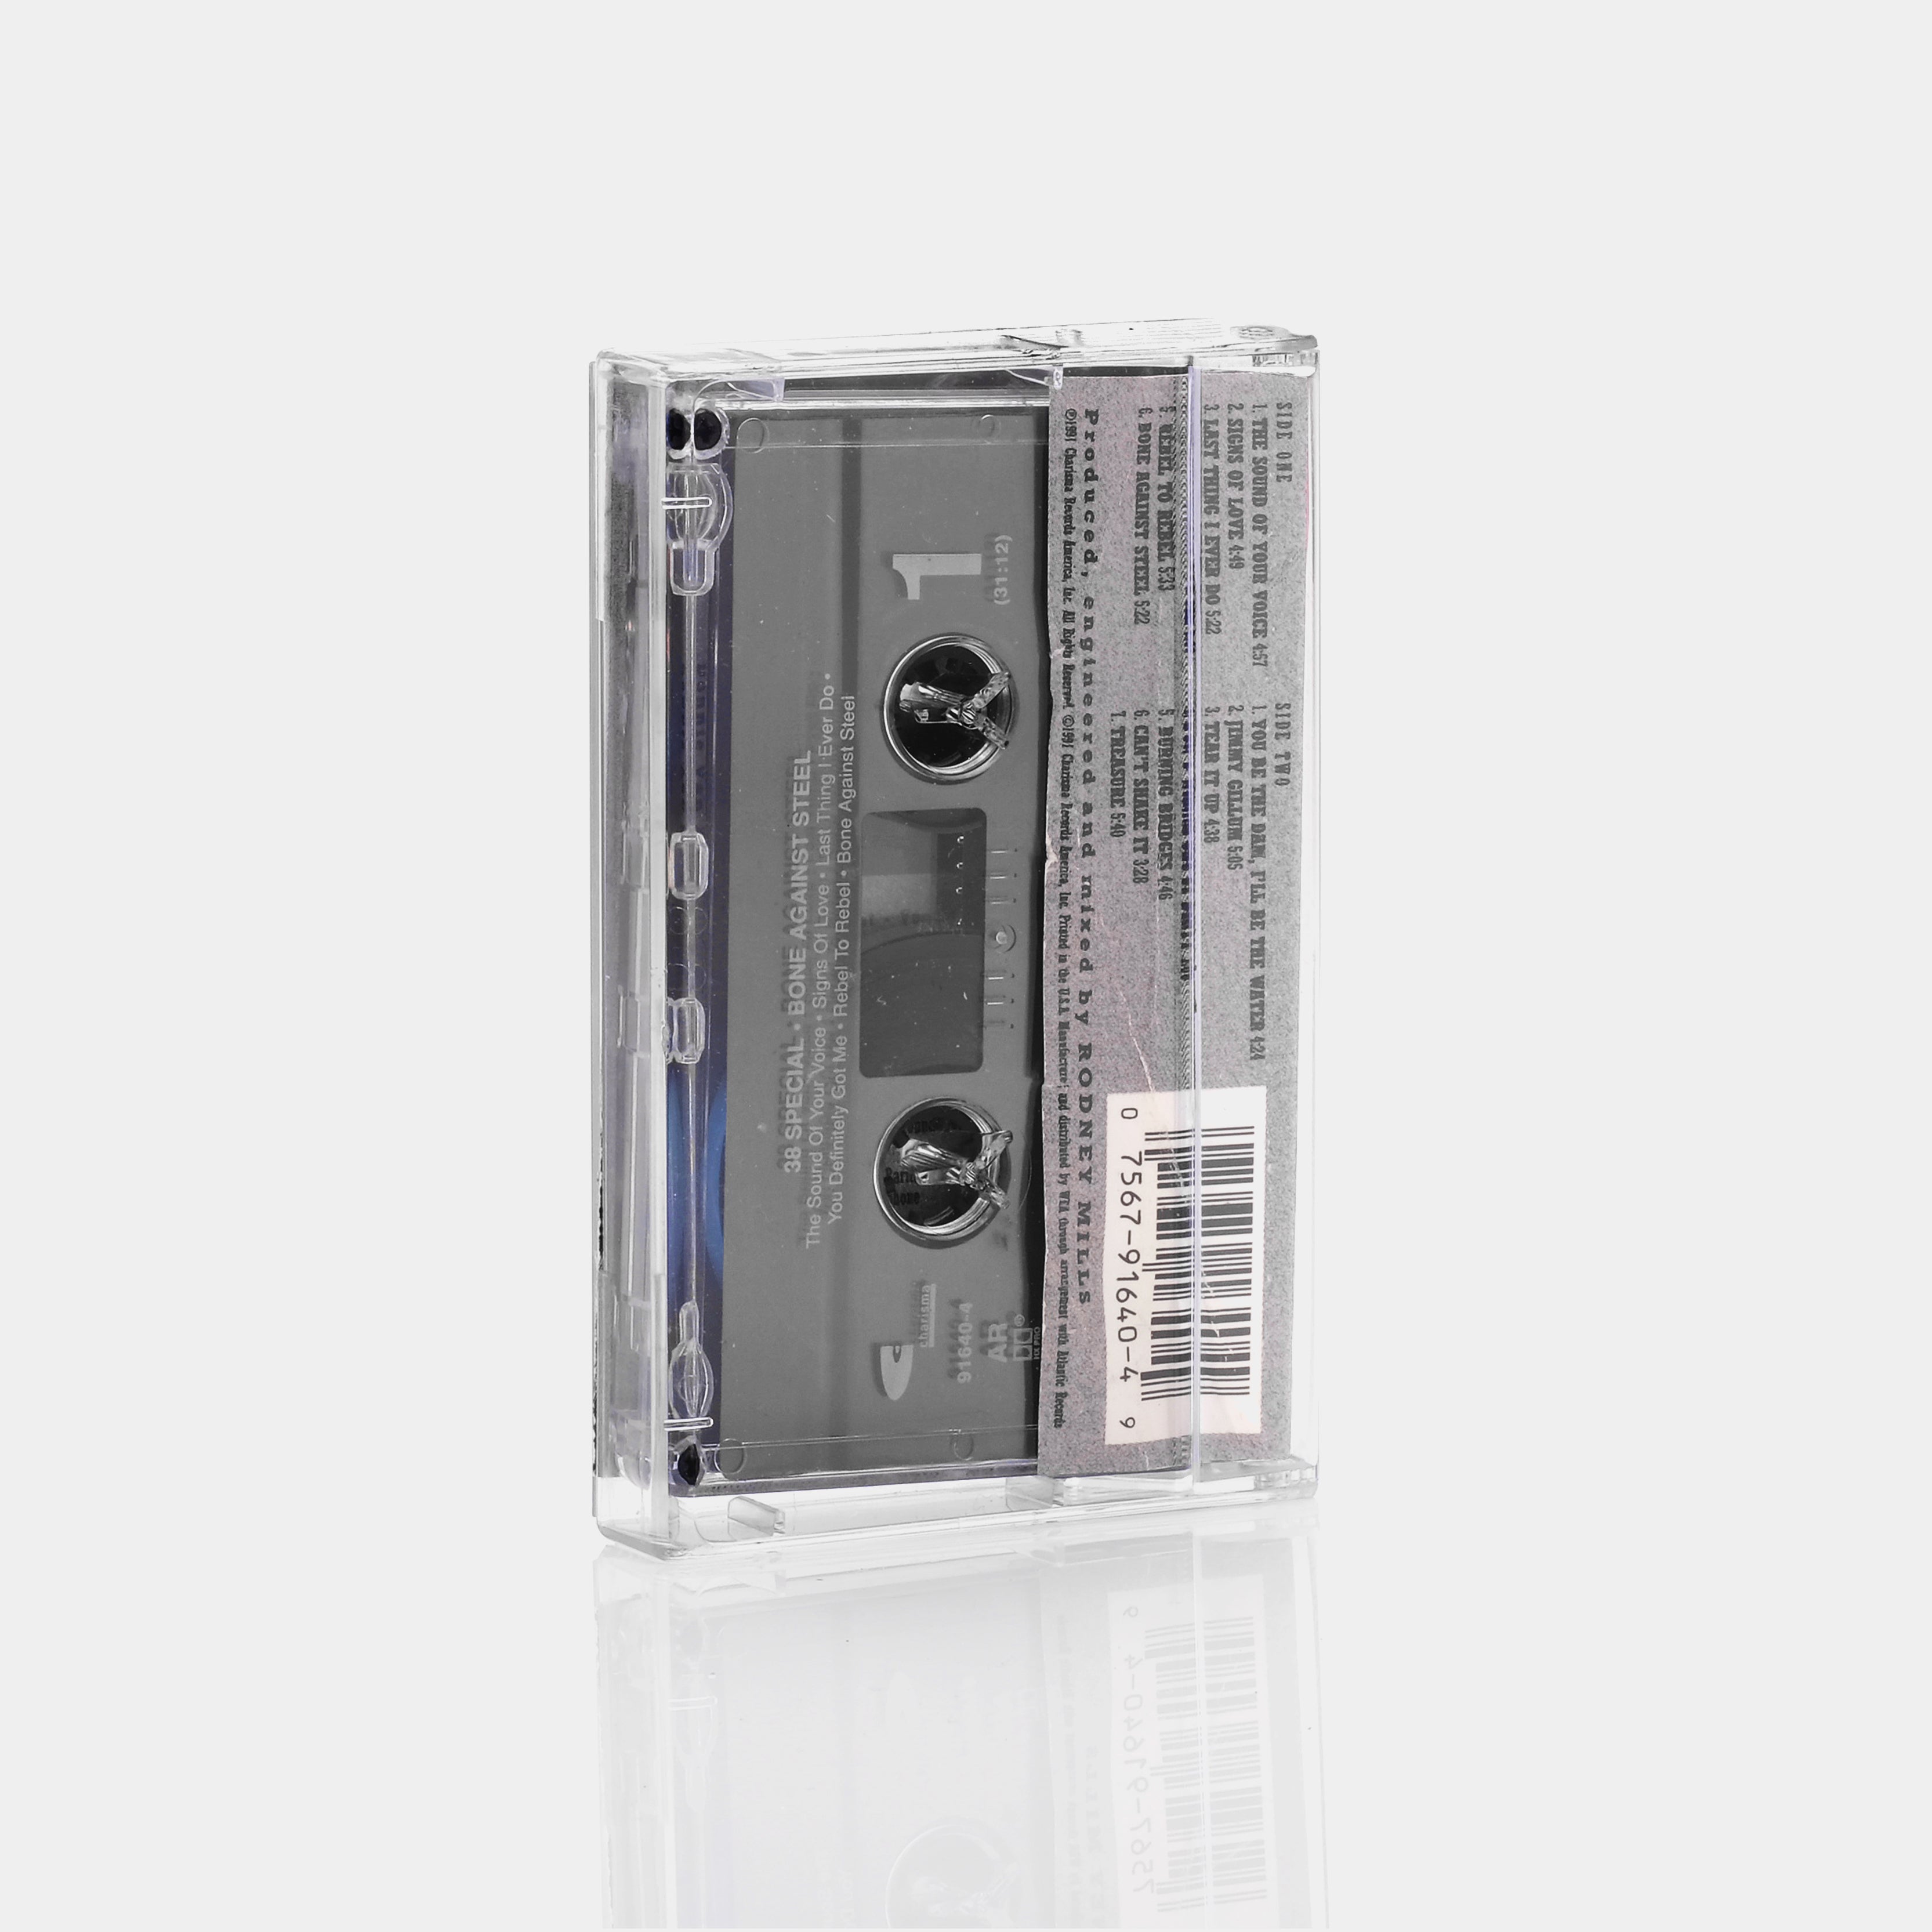 38 Special - Bone Against Steel Cassette Tape